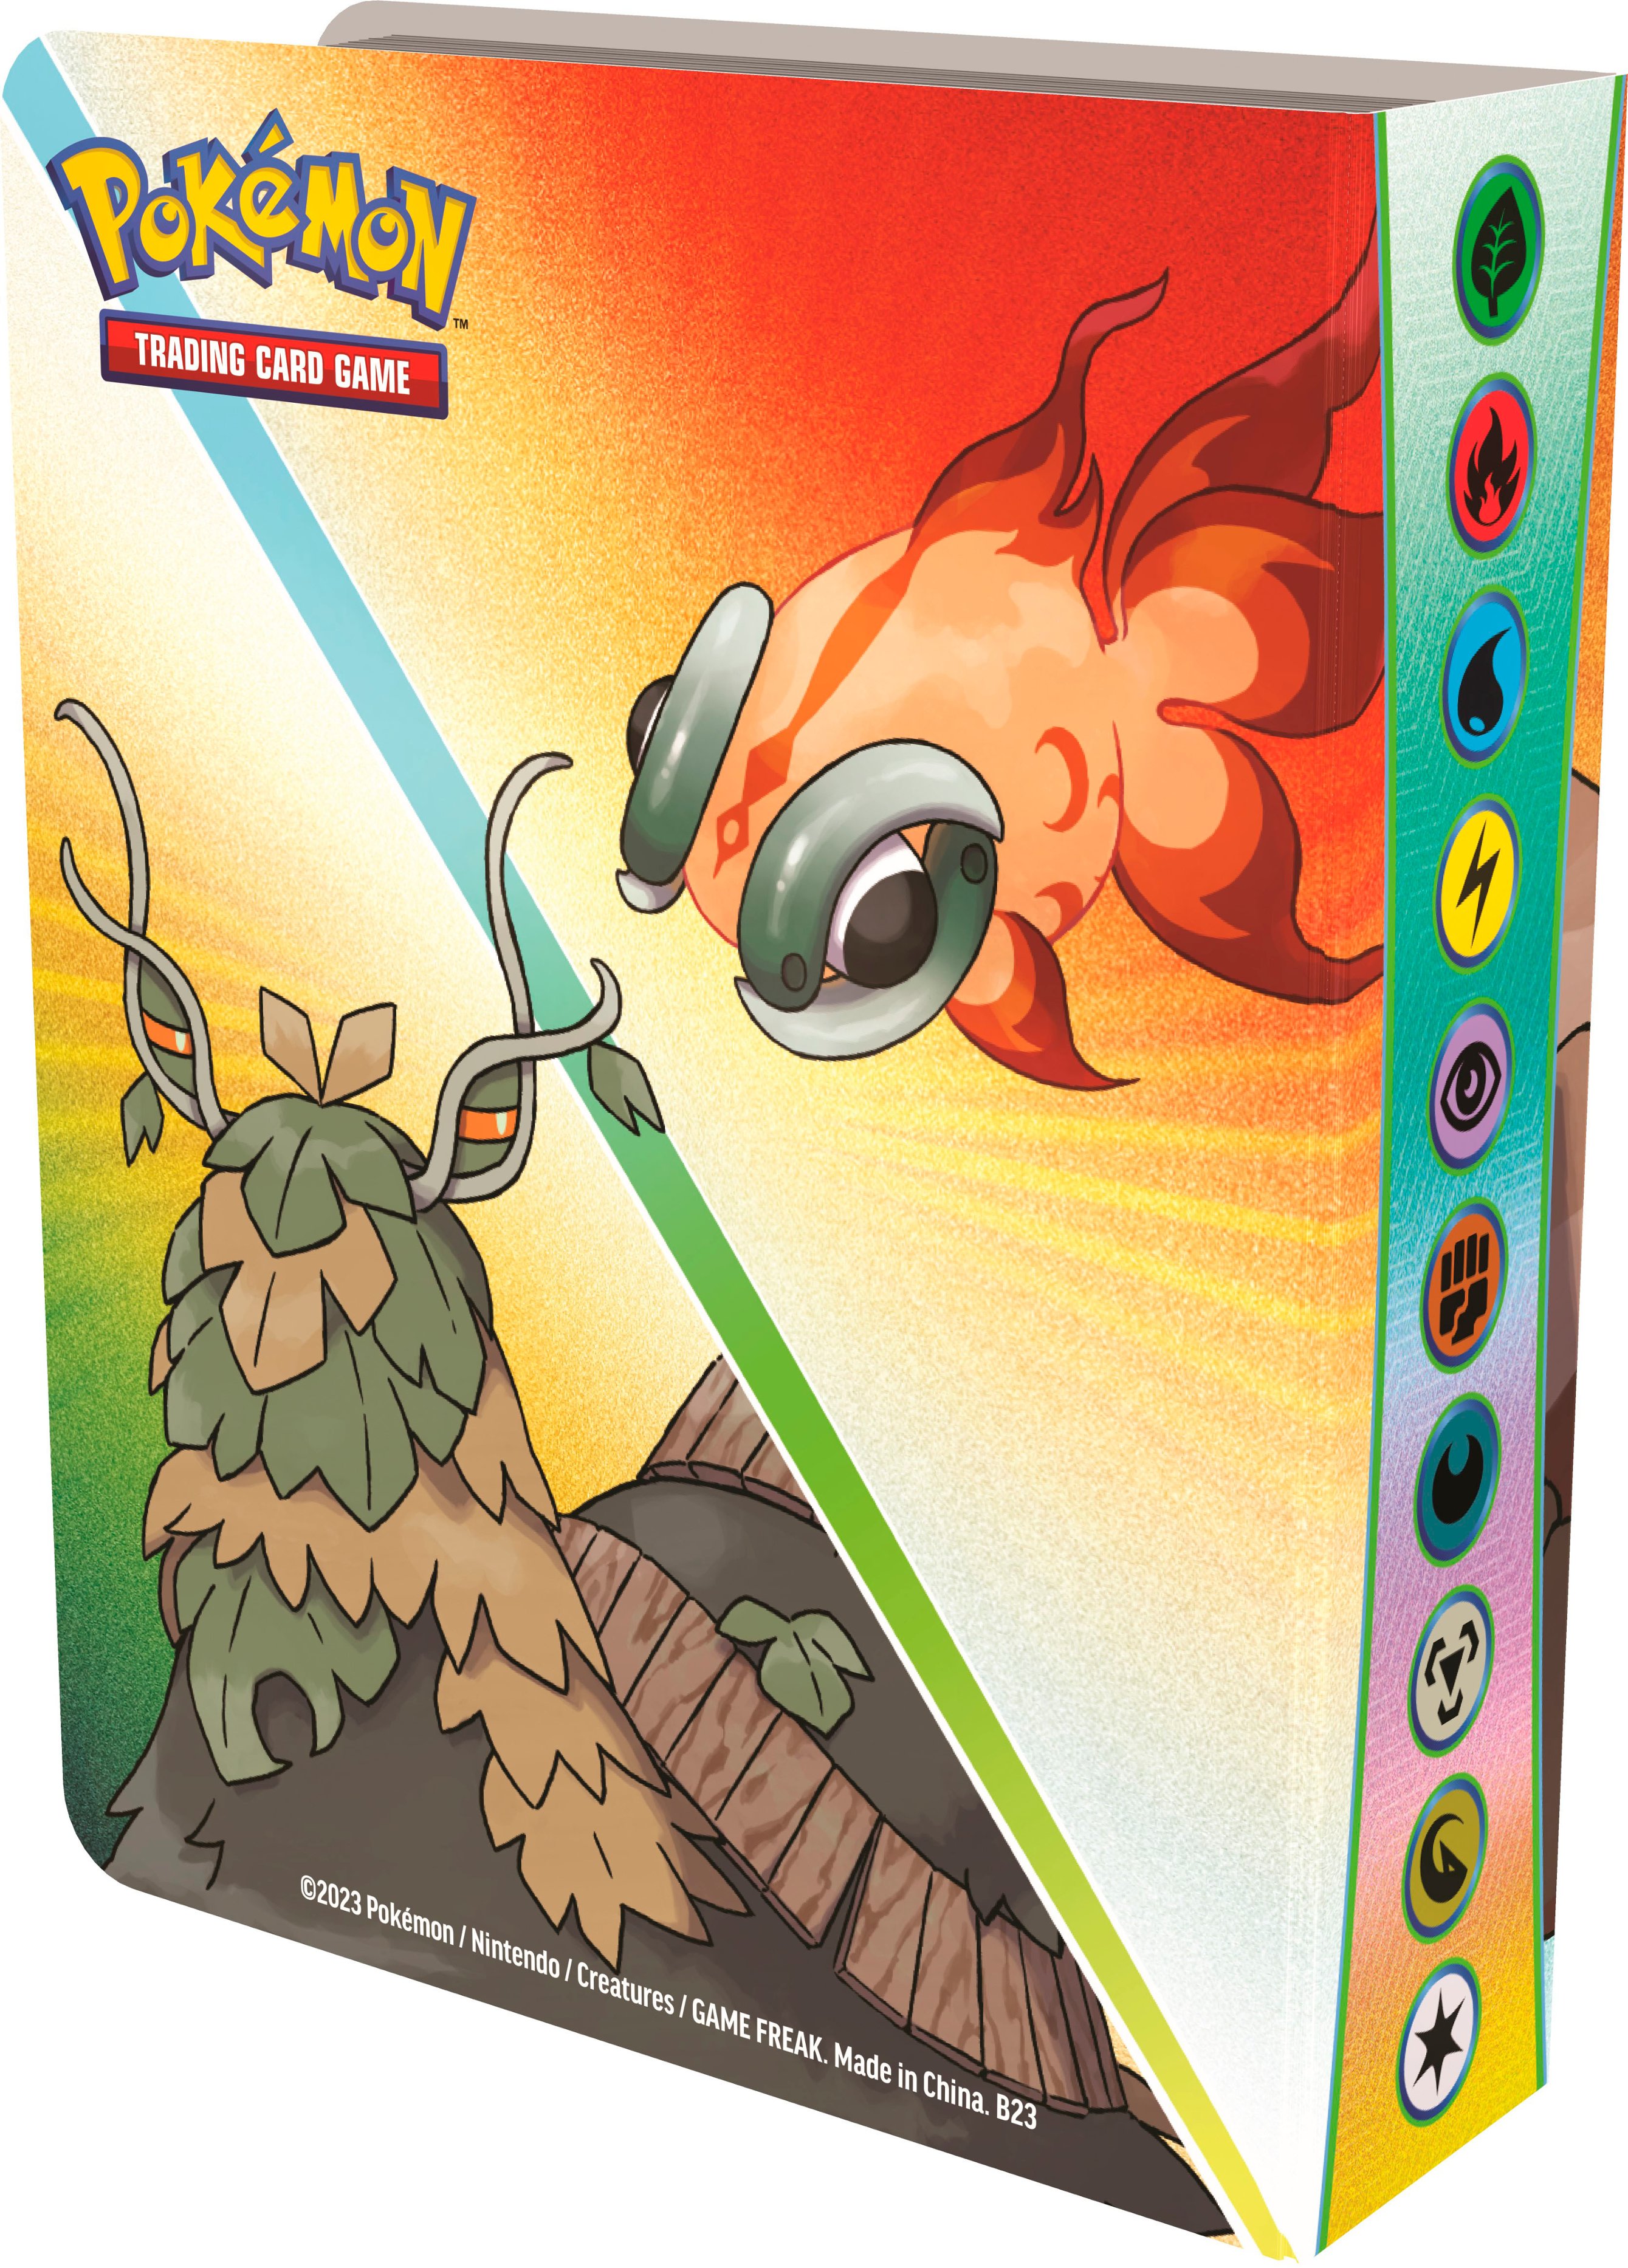 Pokémon Trading Card Game: Mini Portfolio 290-87495 - Best Buy